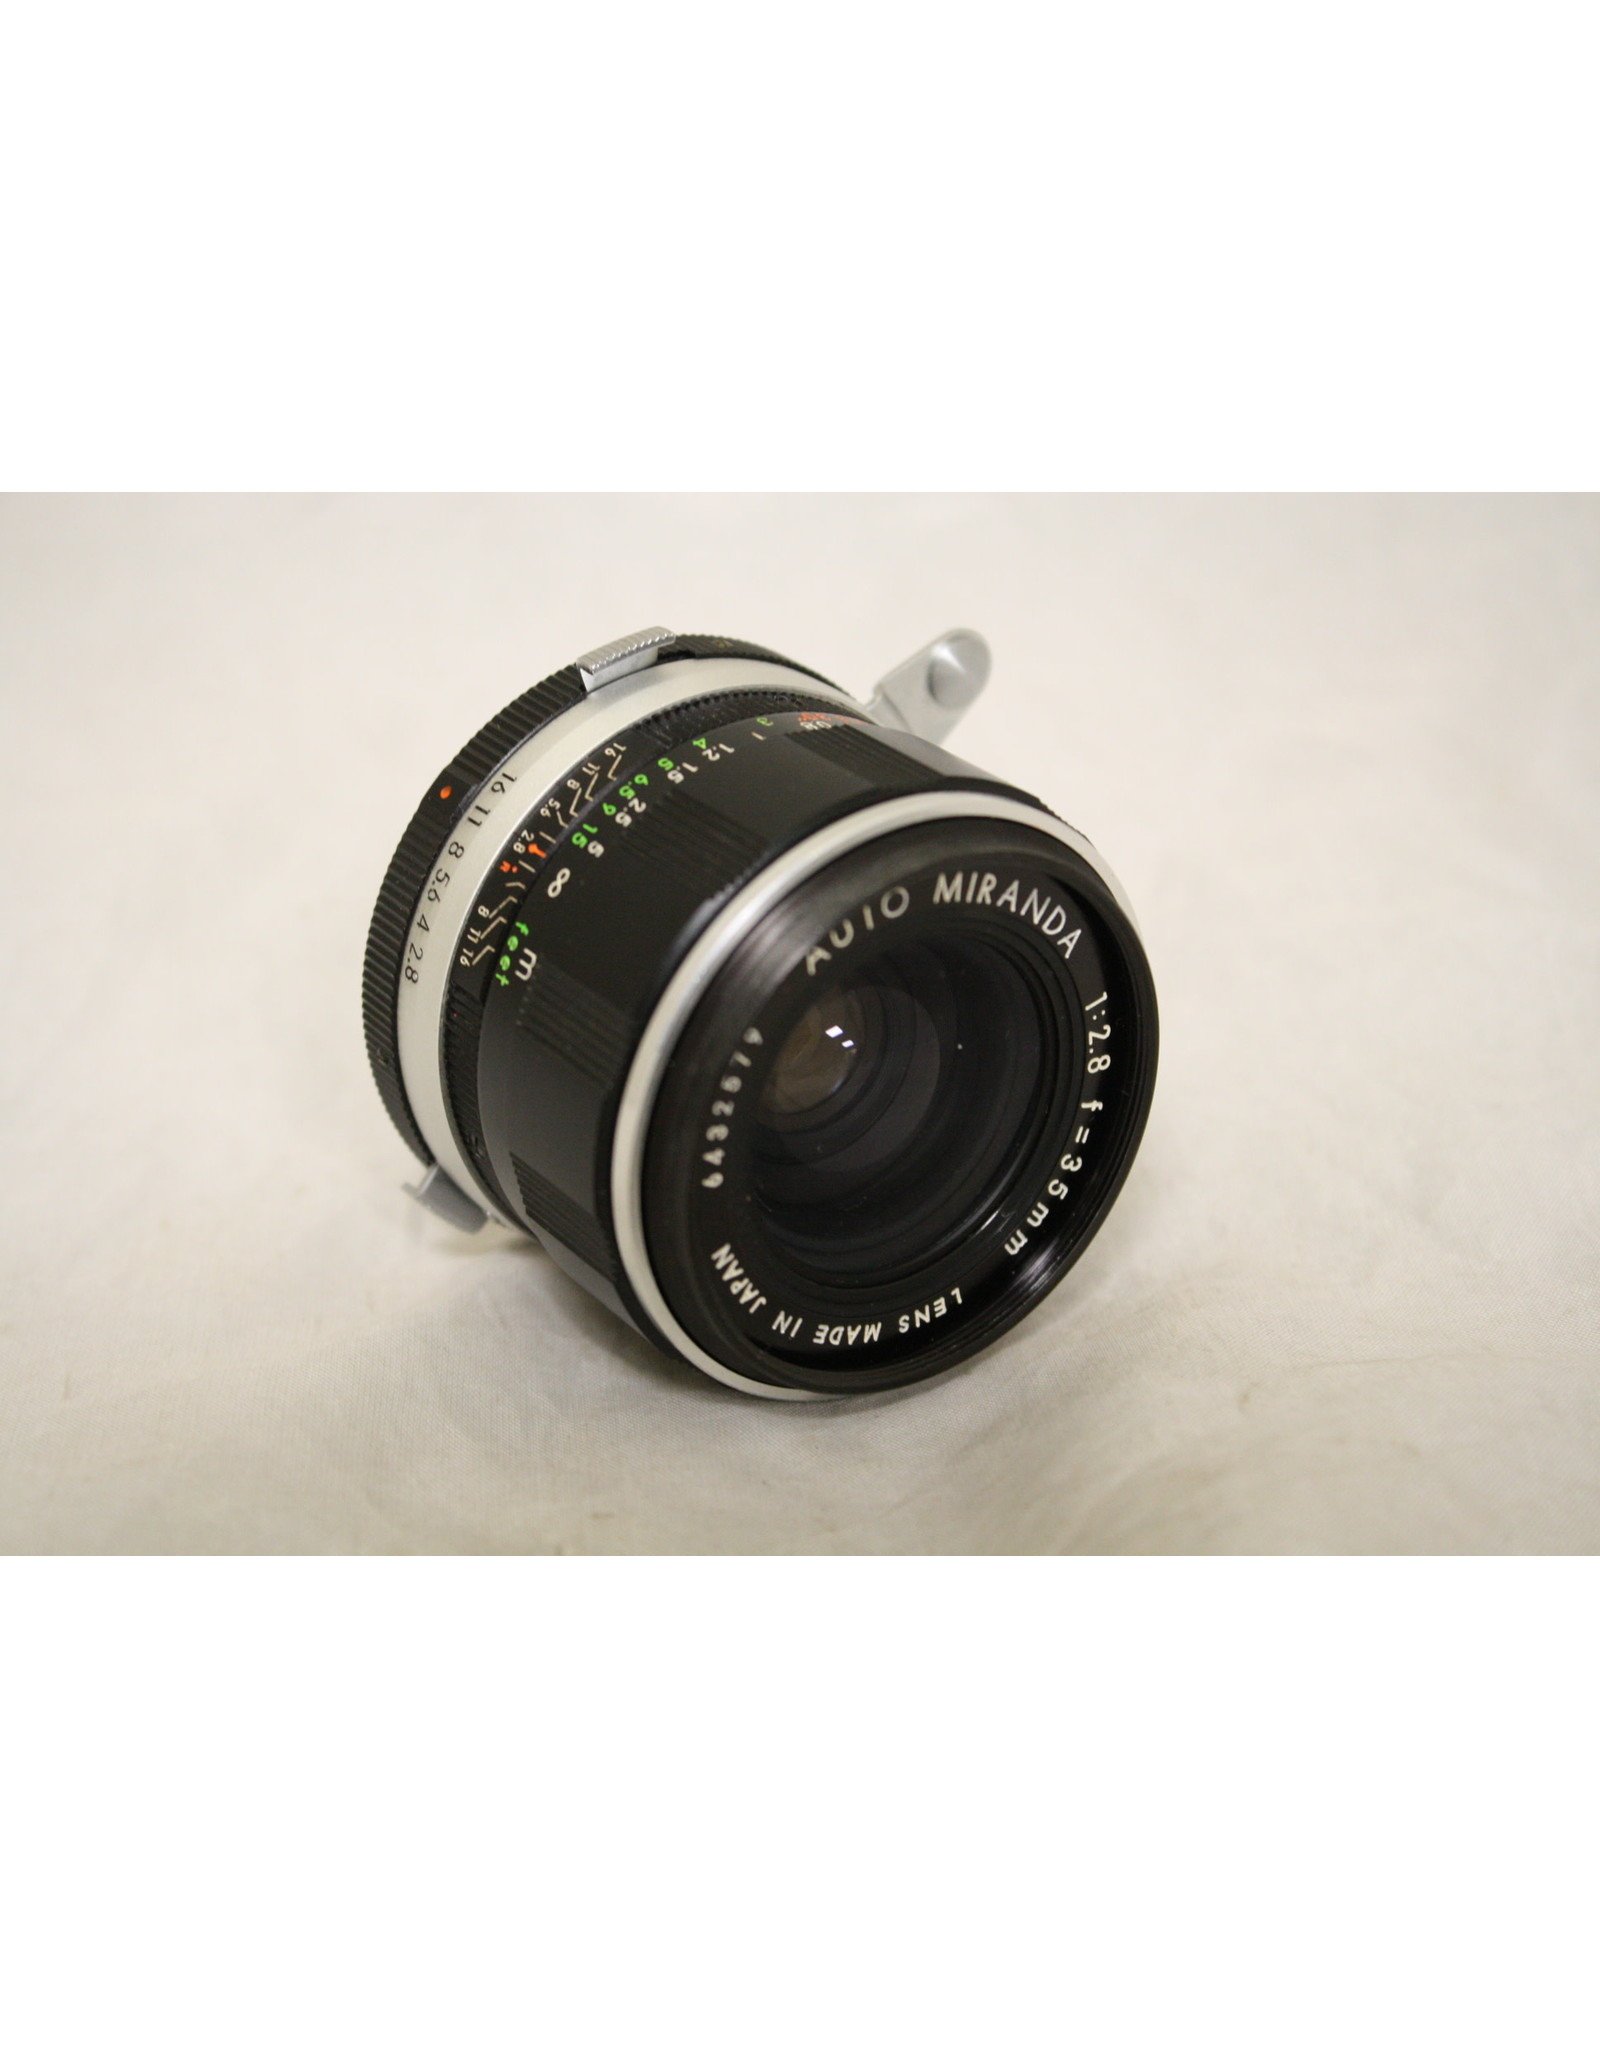 Auto Miranda 35mm 2.8 Film Camera Lens